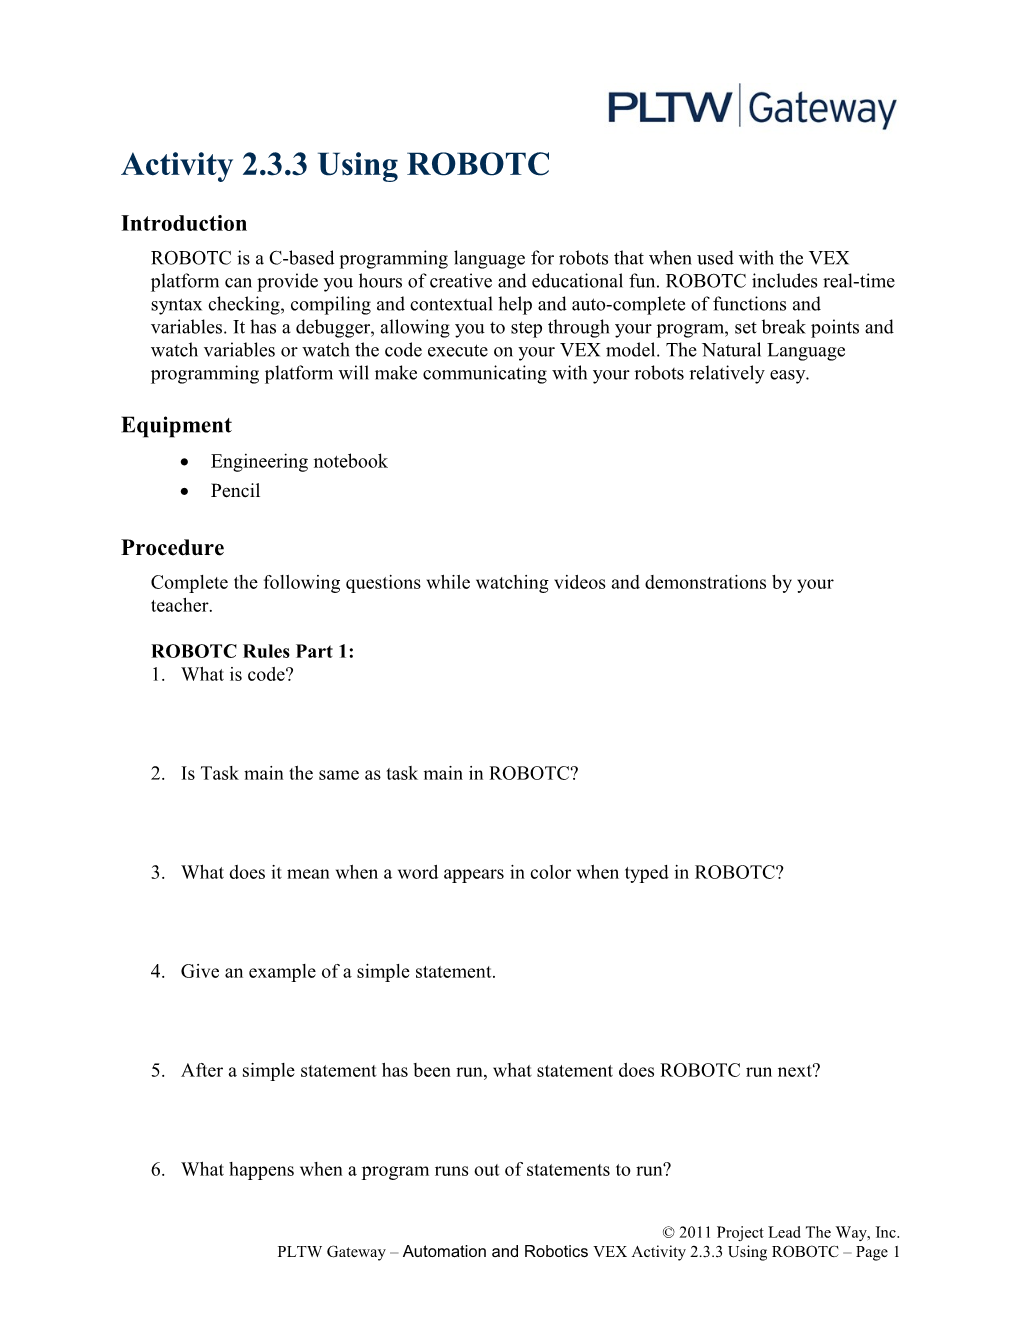 Activity 2.3.3 Using ROBOTC